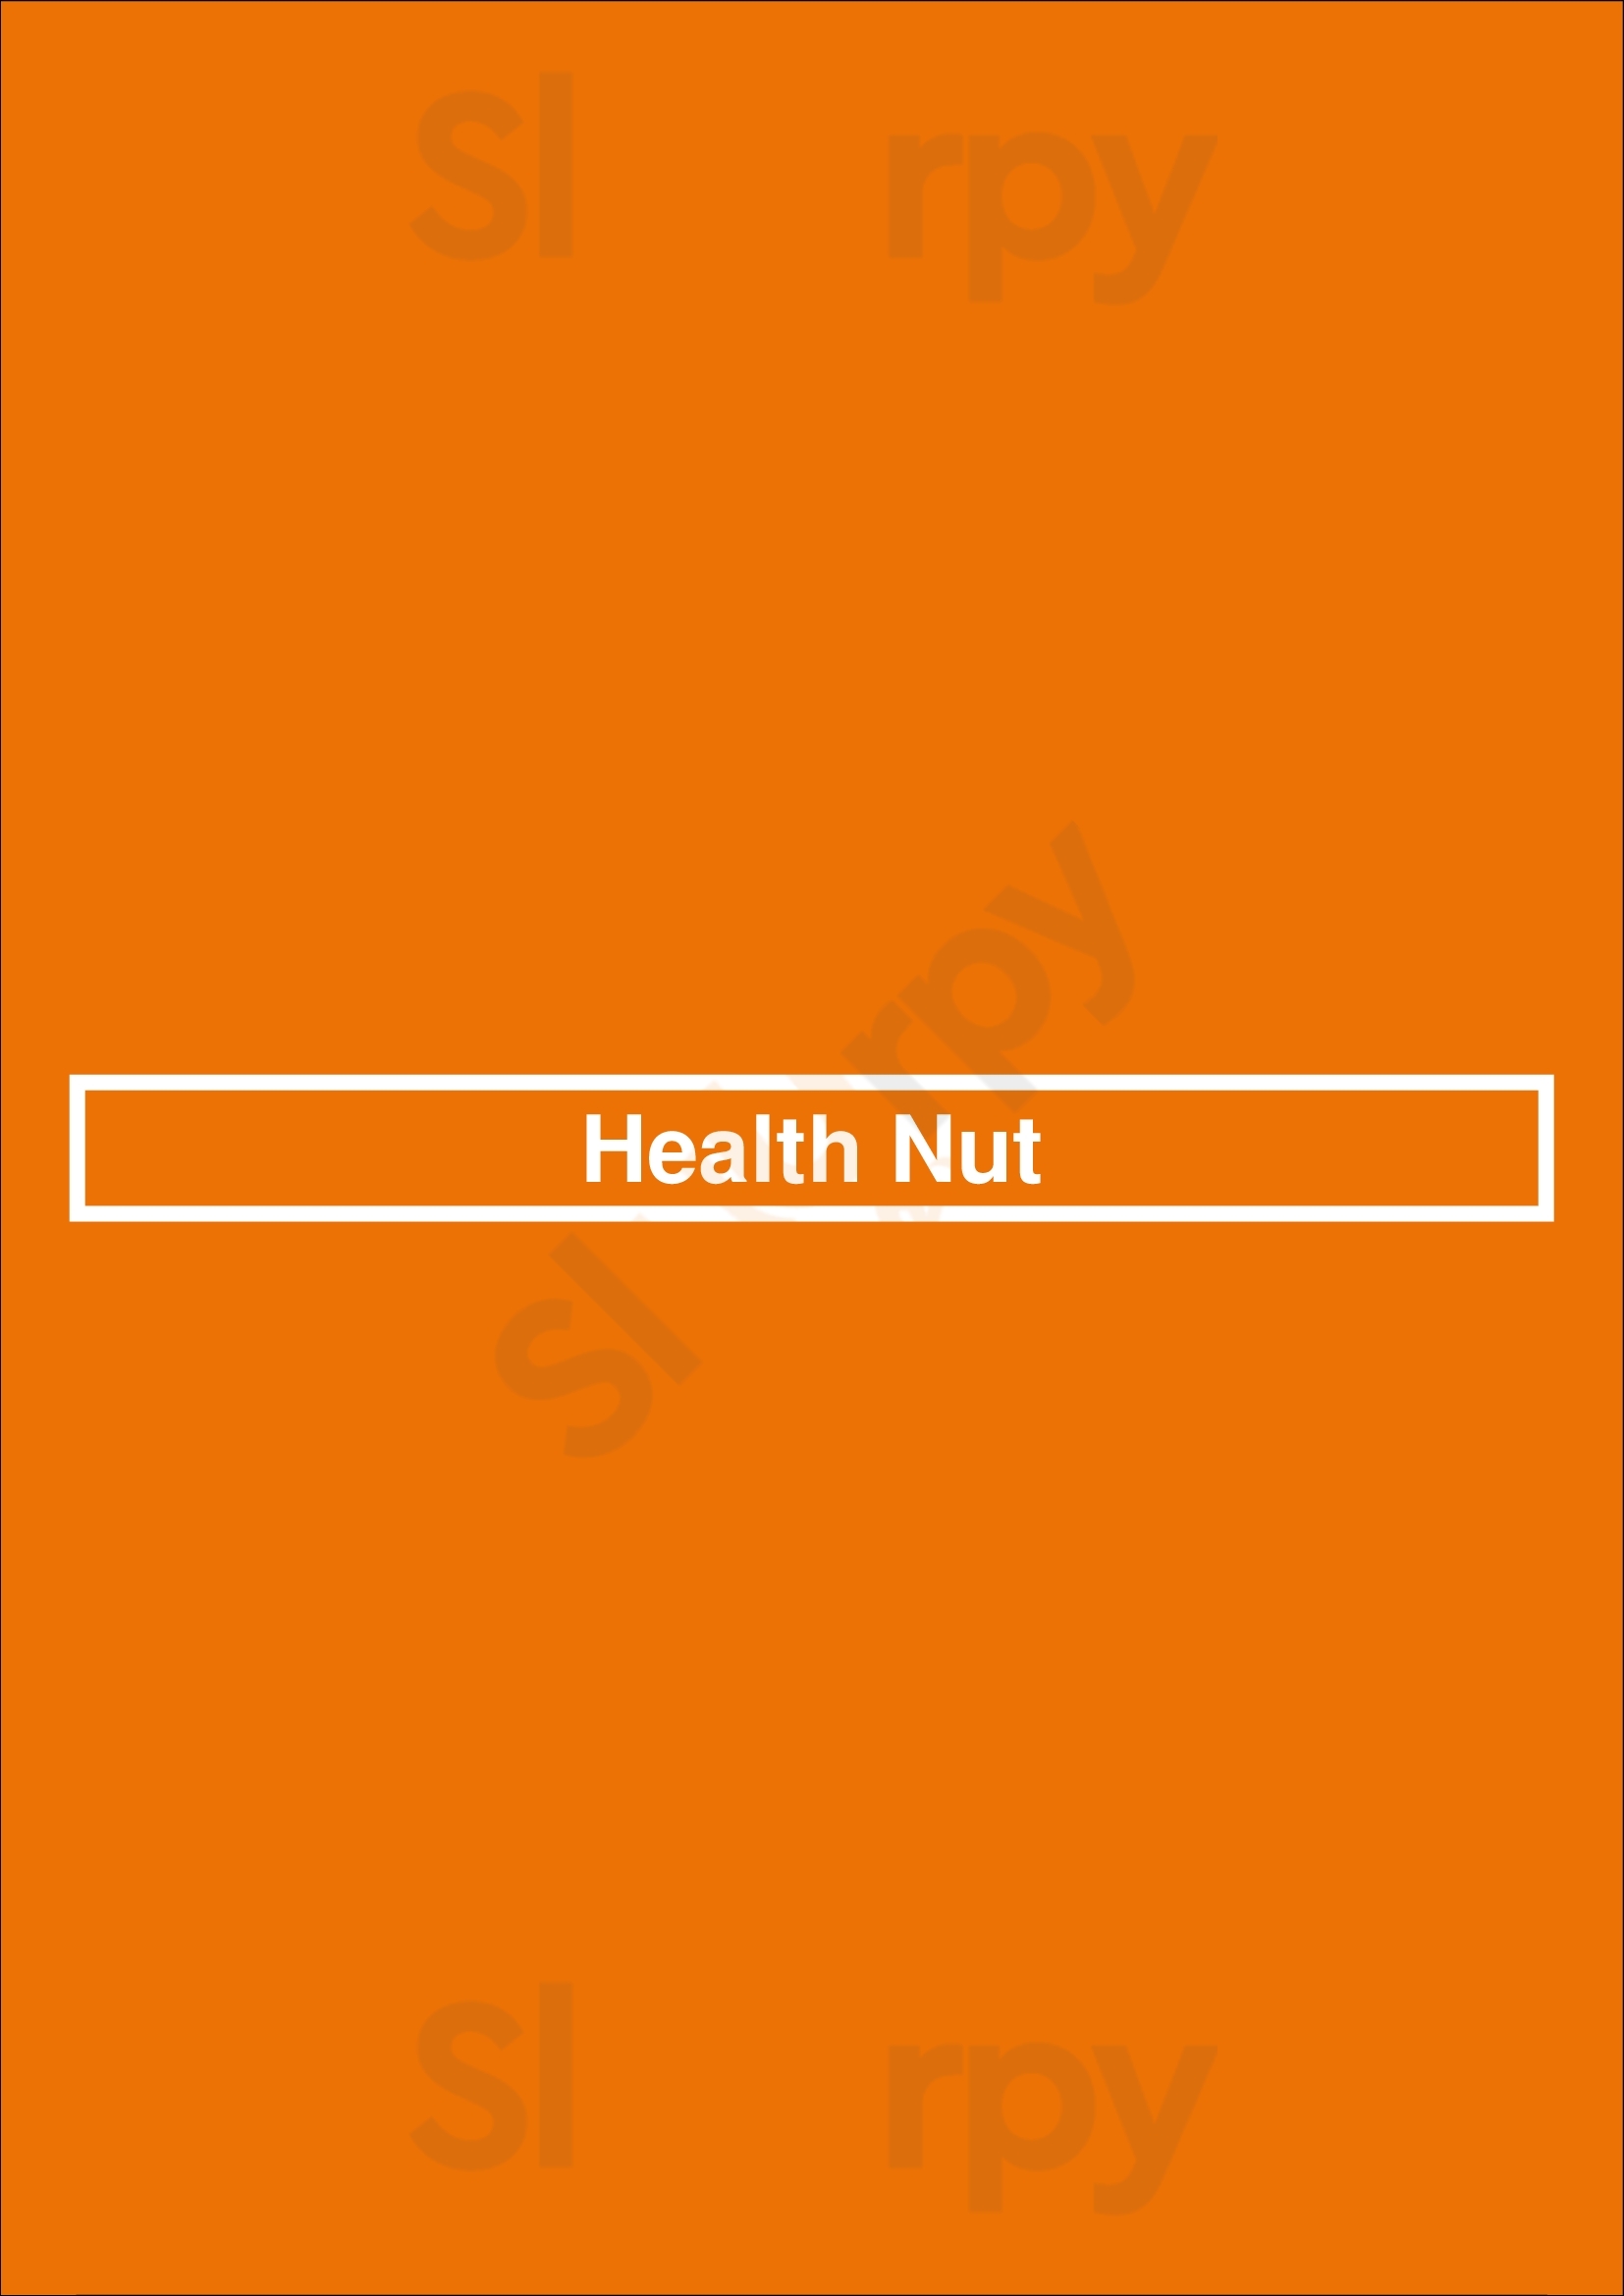 Health Nut Los Angeles Menu - 1